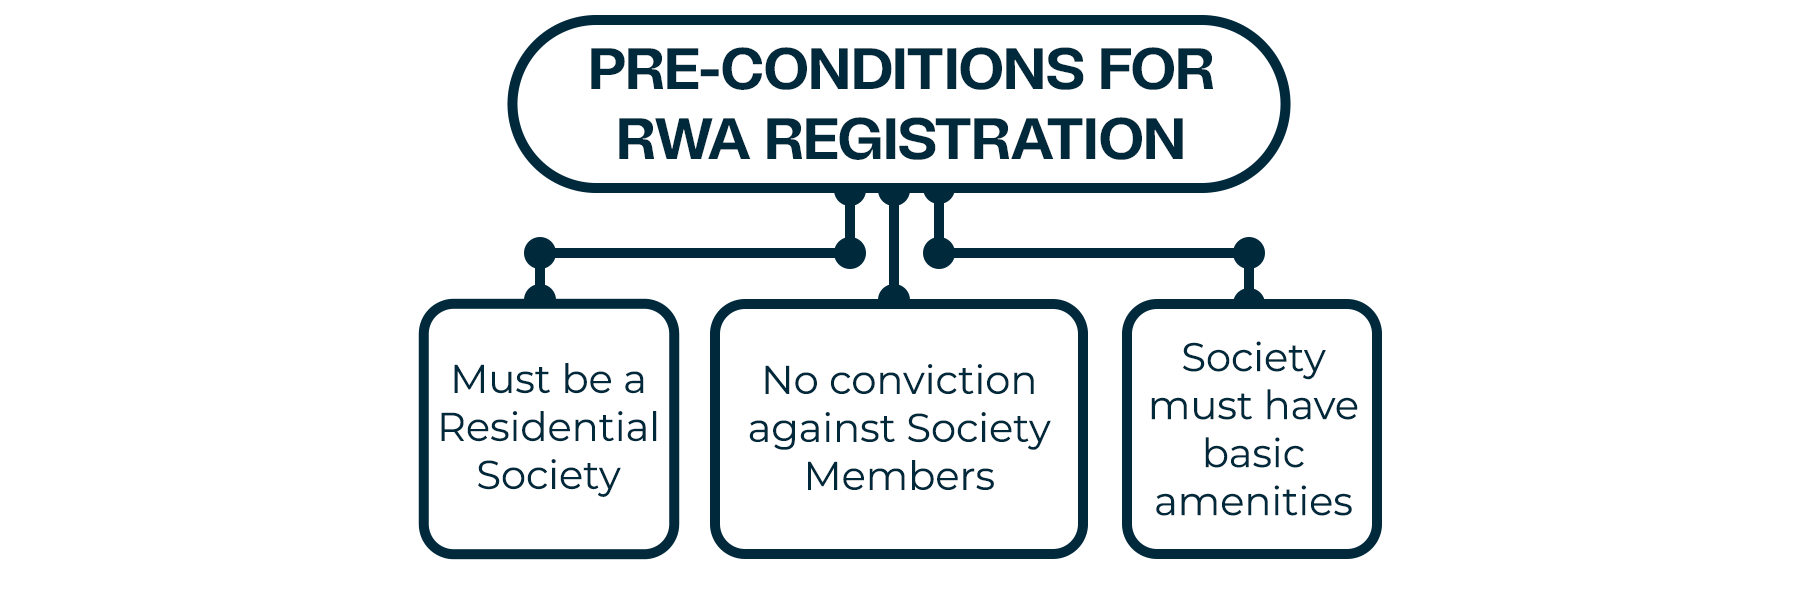 Eligibility Criteria for RWA Registration in India